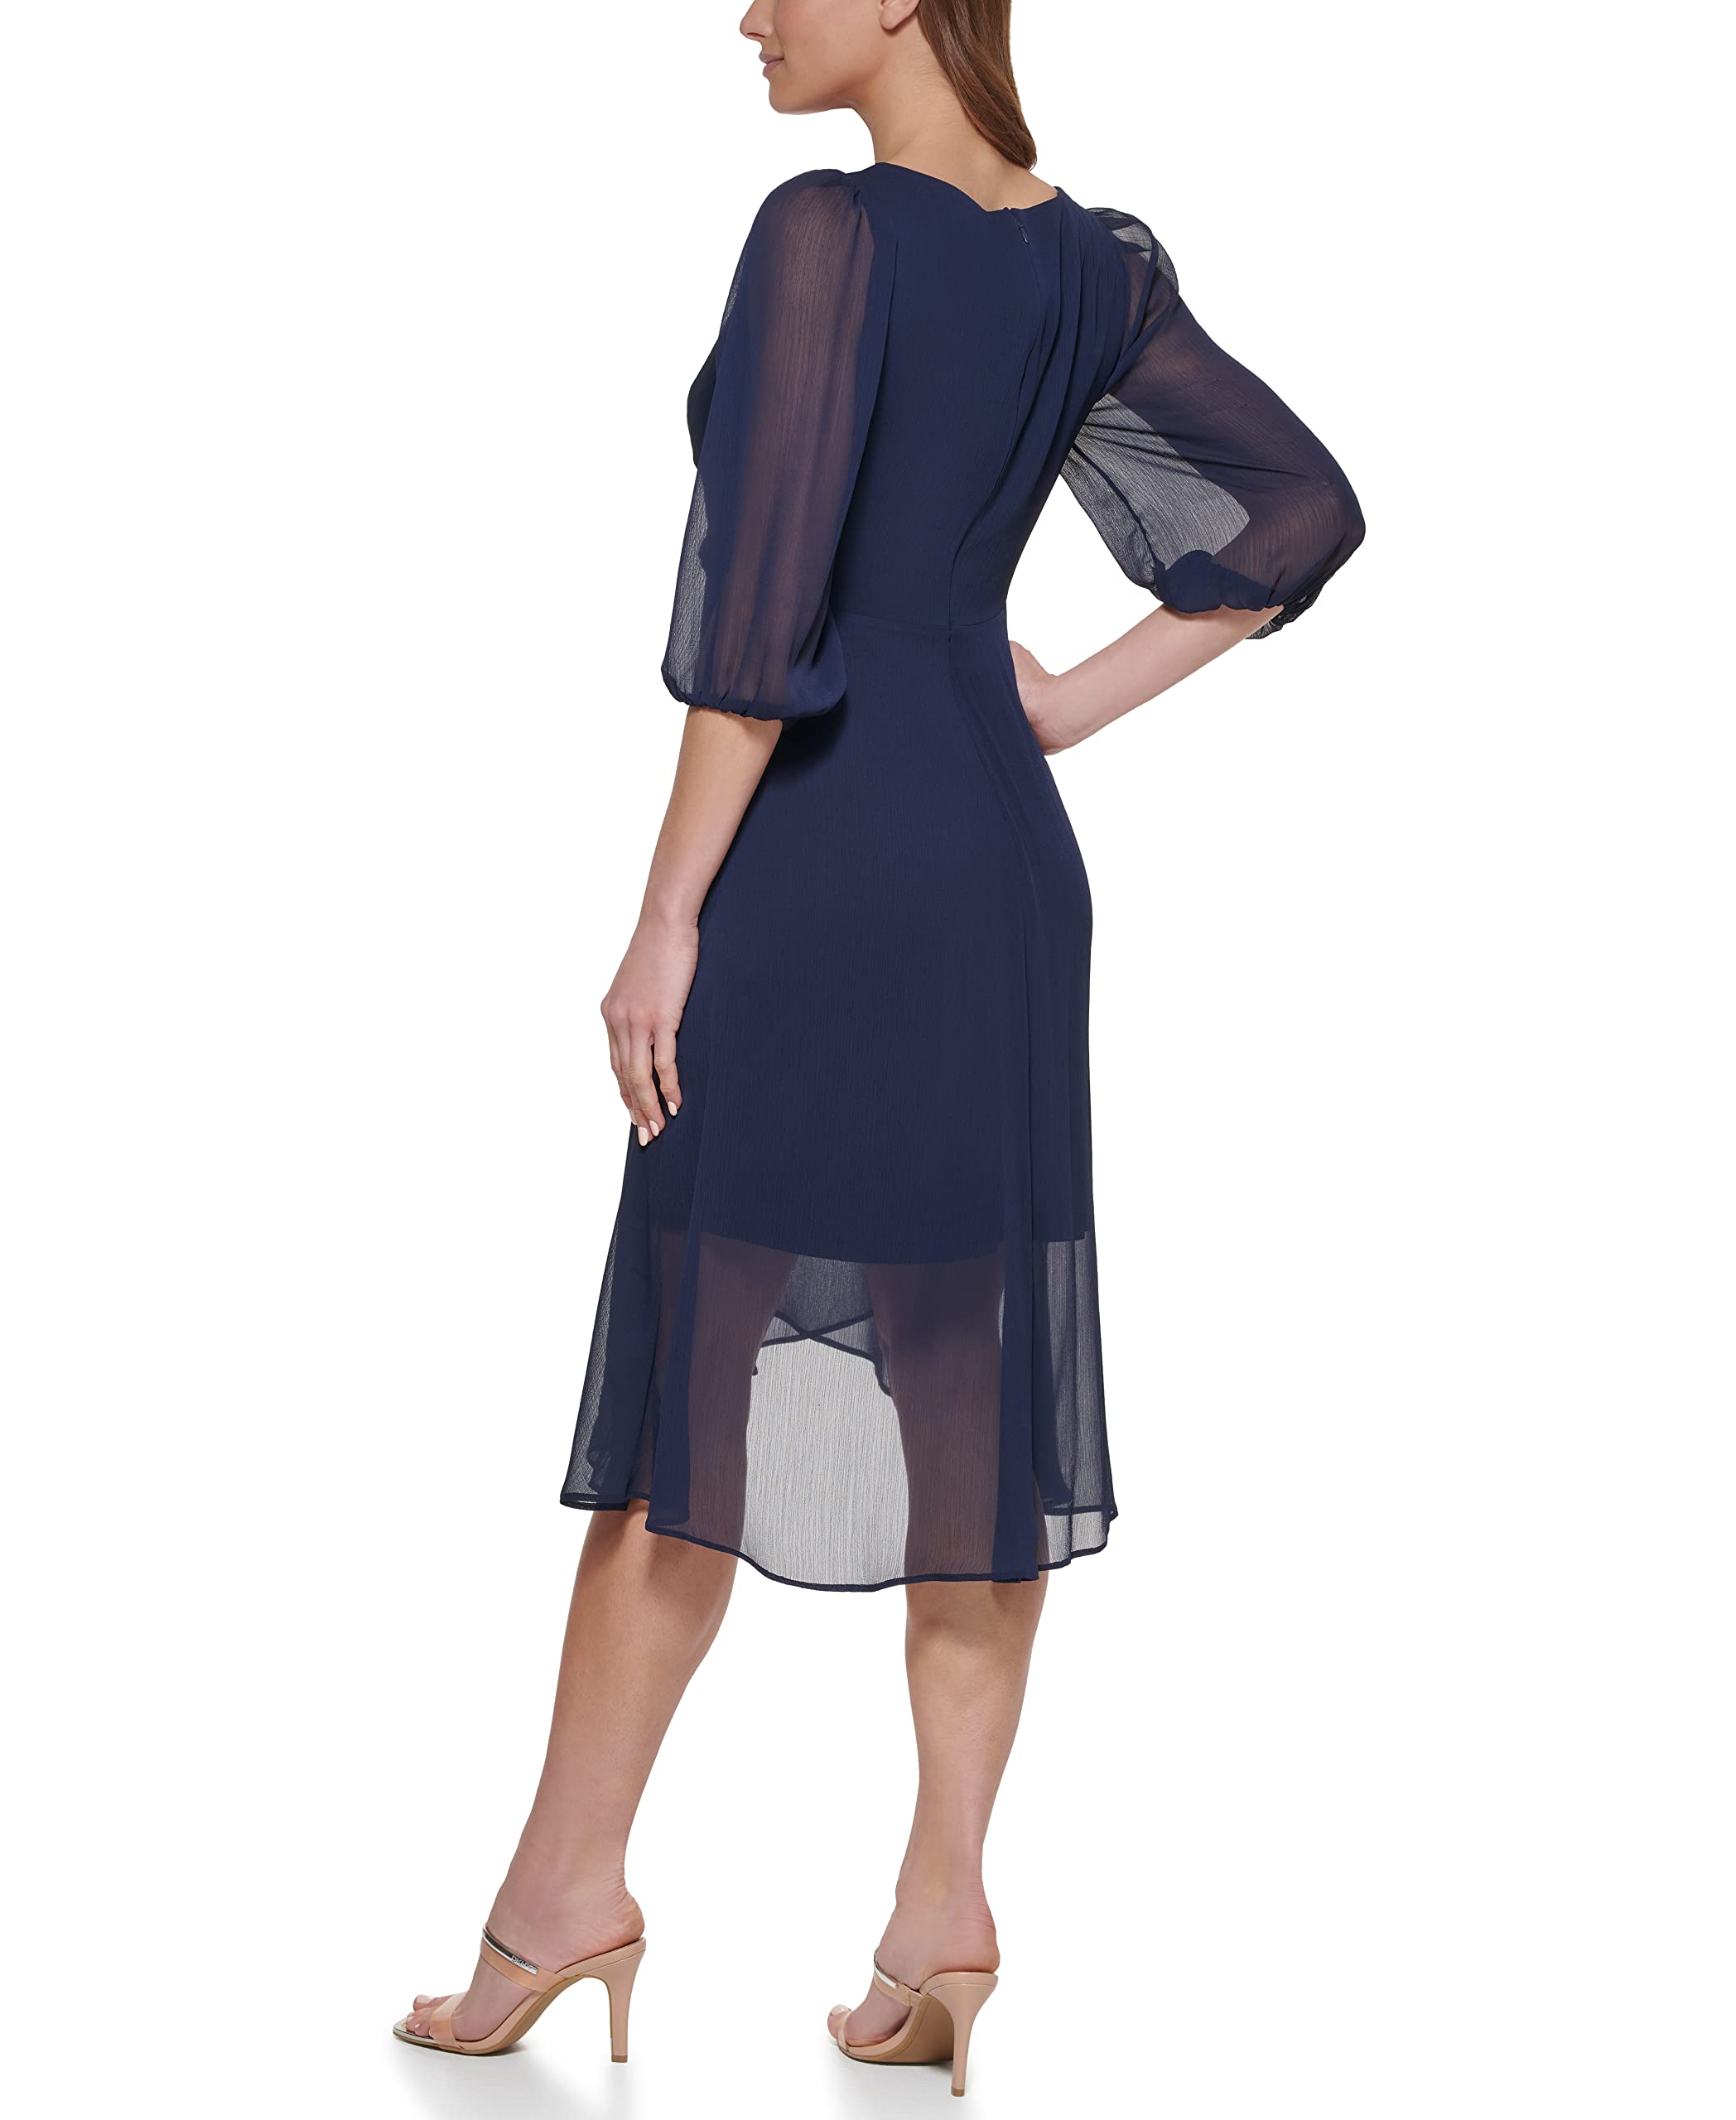 DKNY Women's Chiffon 3/4 Sleeve Faux Wrap Dress